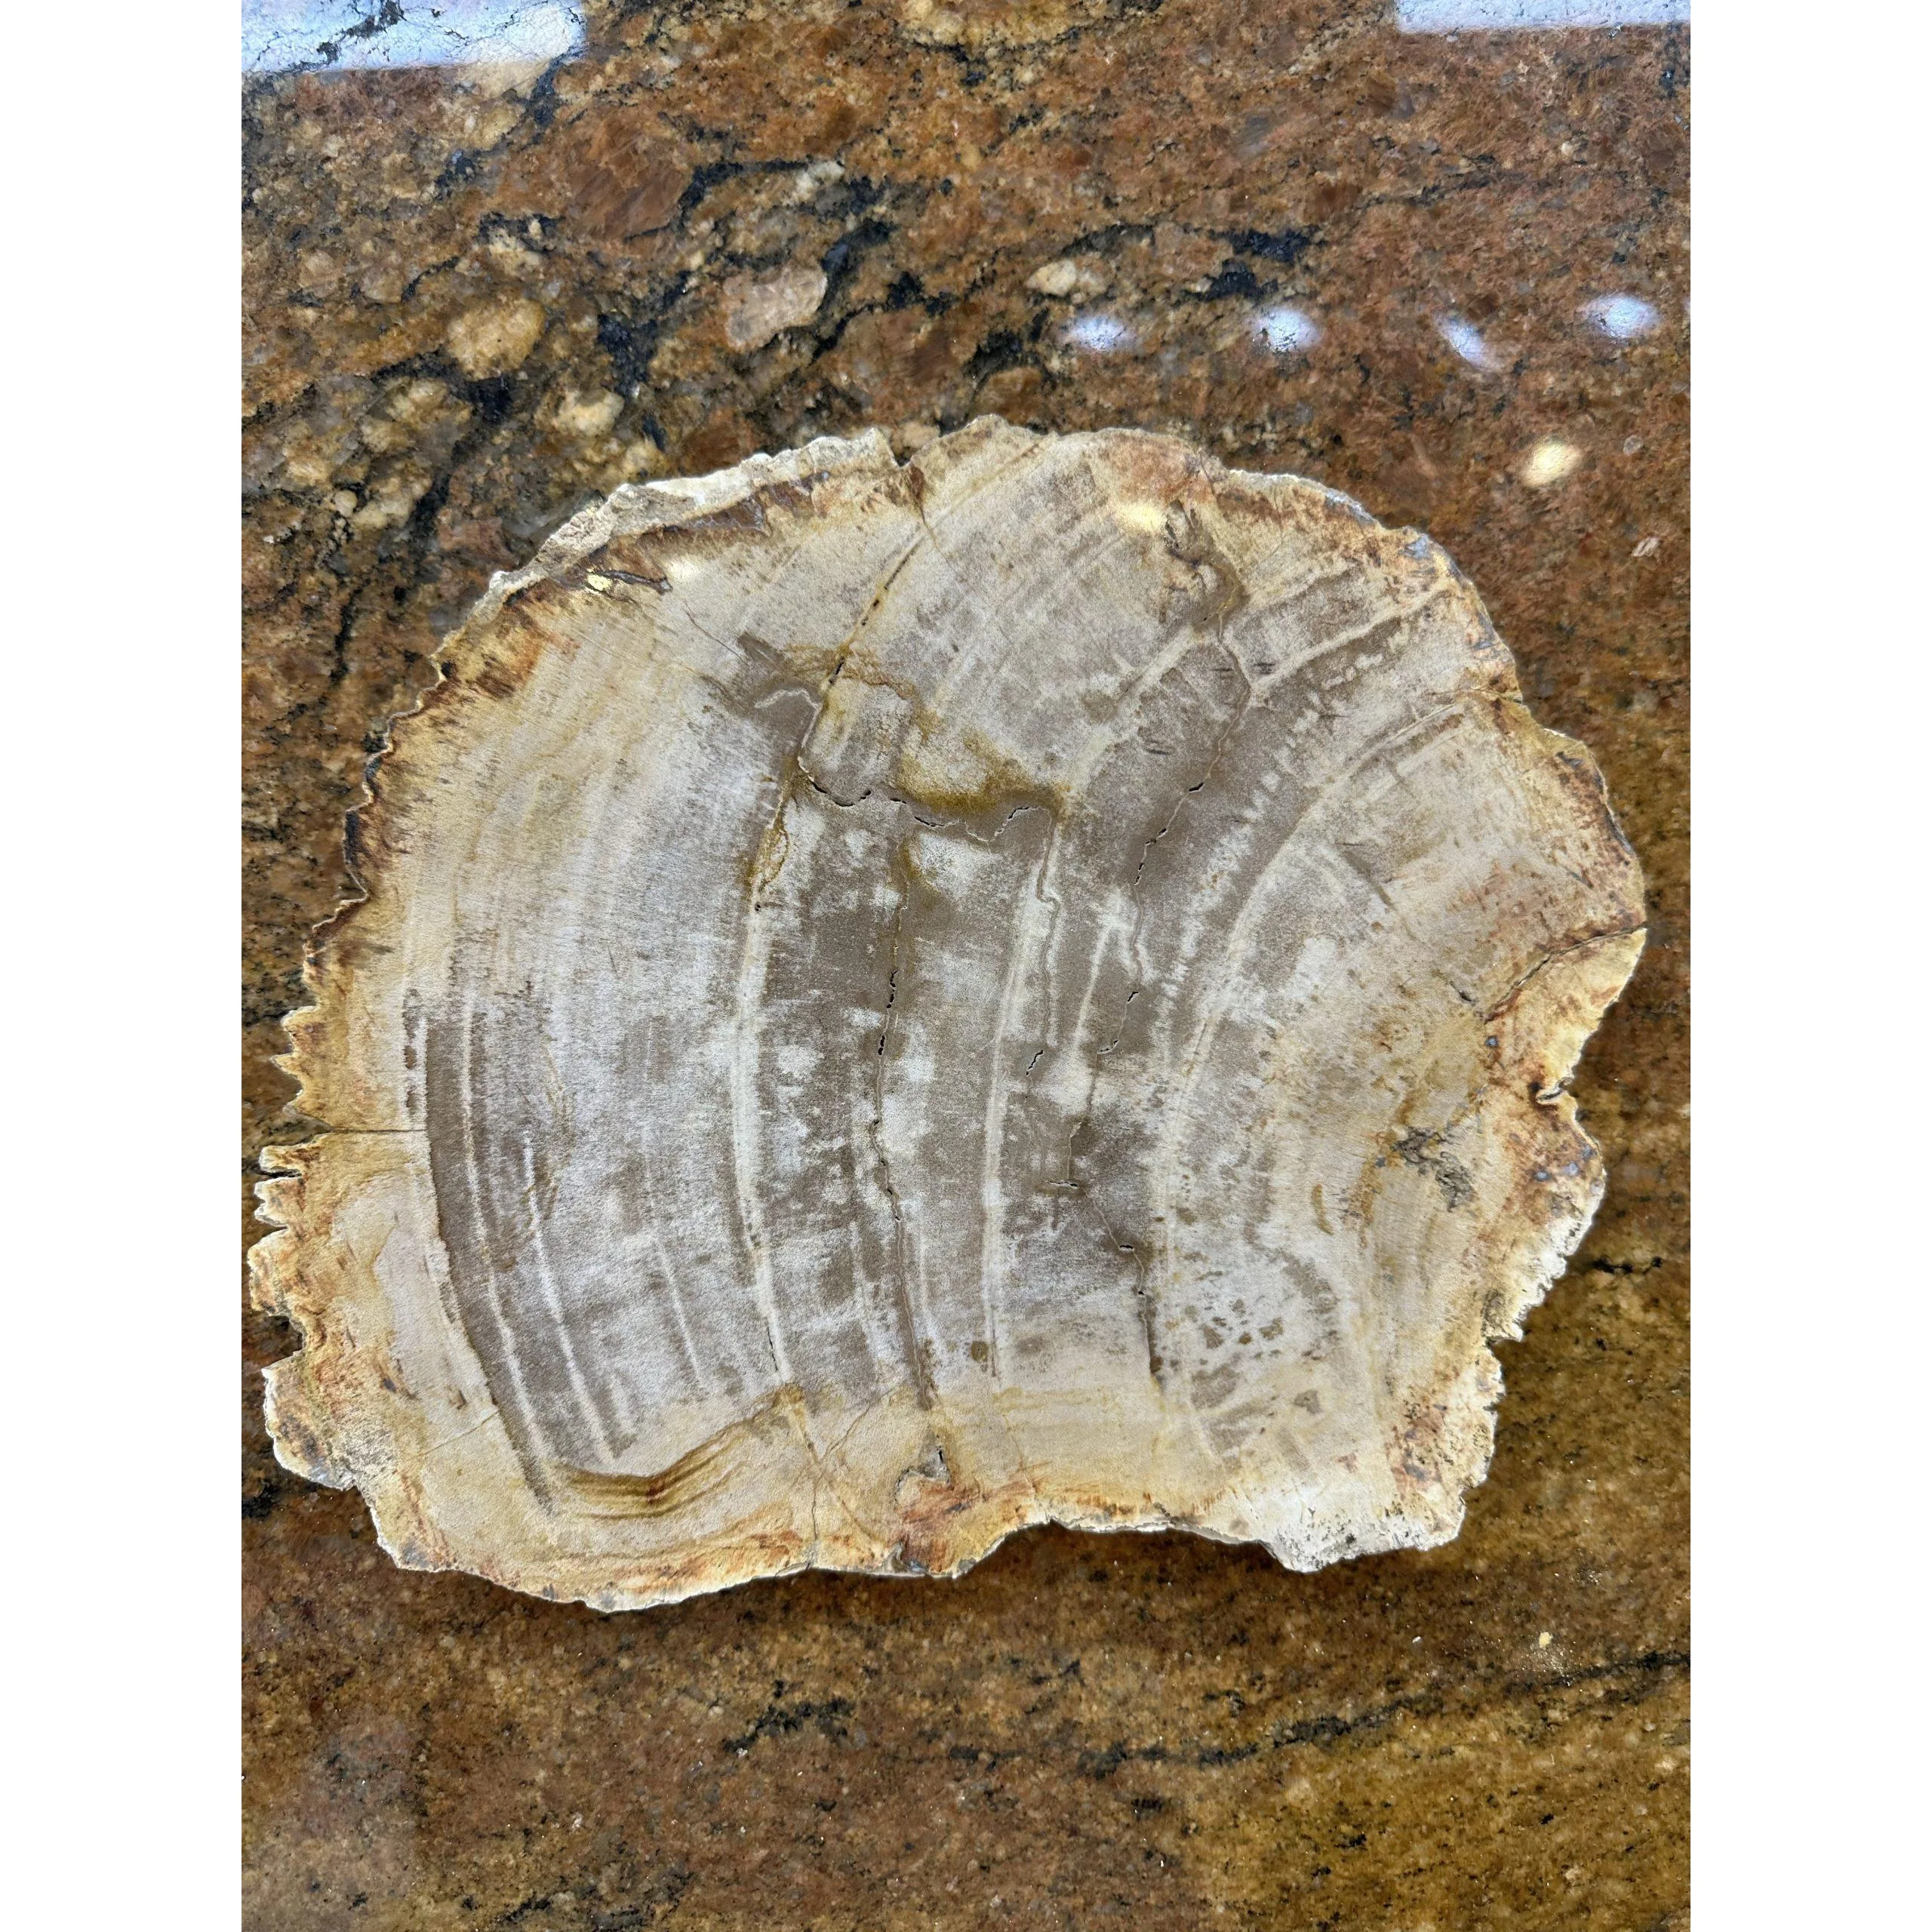 petrified wood fossils